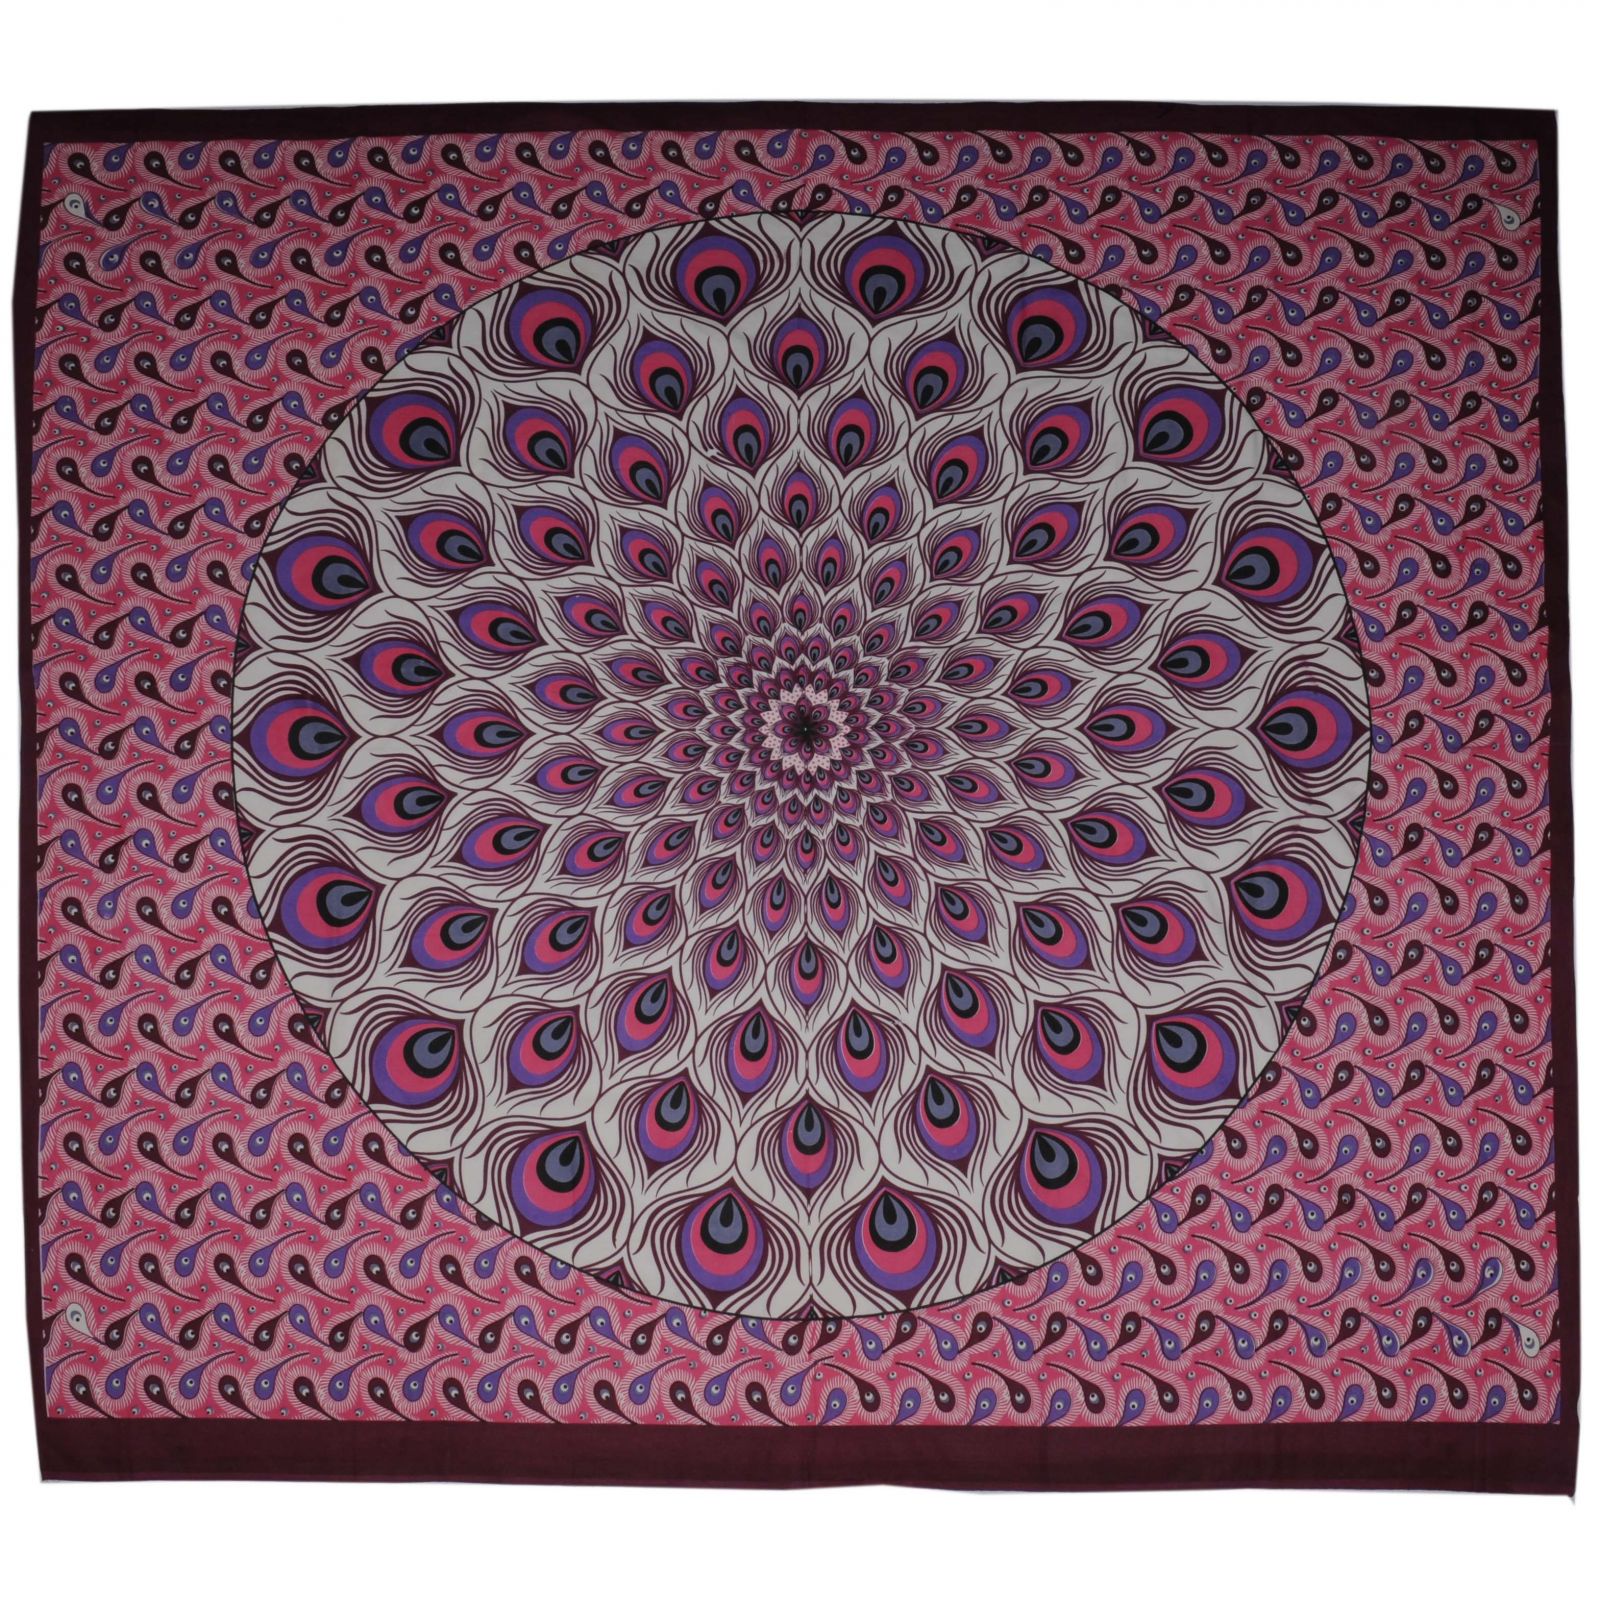 BOB Batik indický přehoz na postel Paví oko růžovo fialový 230 x 210 cm bavlna. King size. Dvoulůžko. | SoNo spol. s r.o.